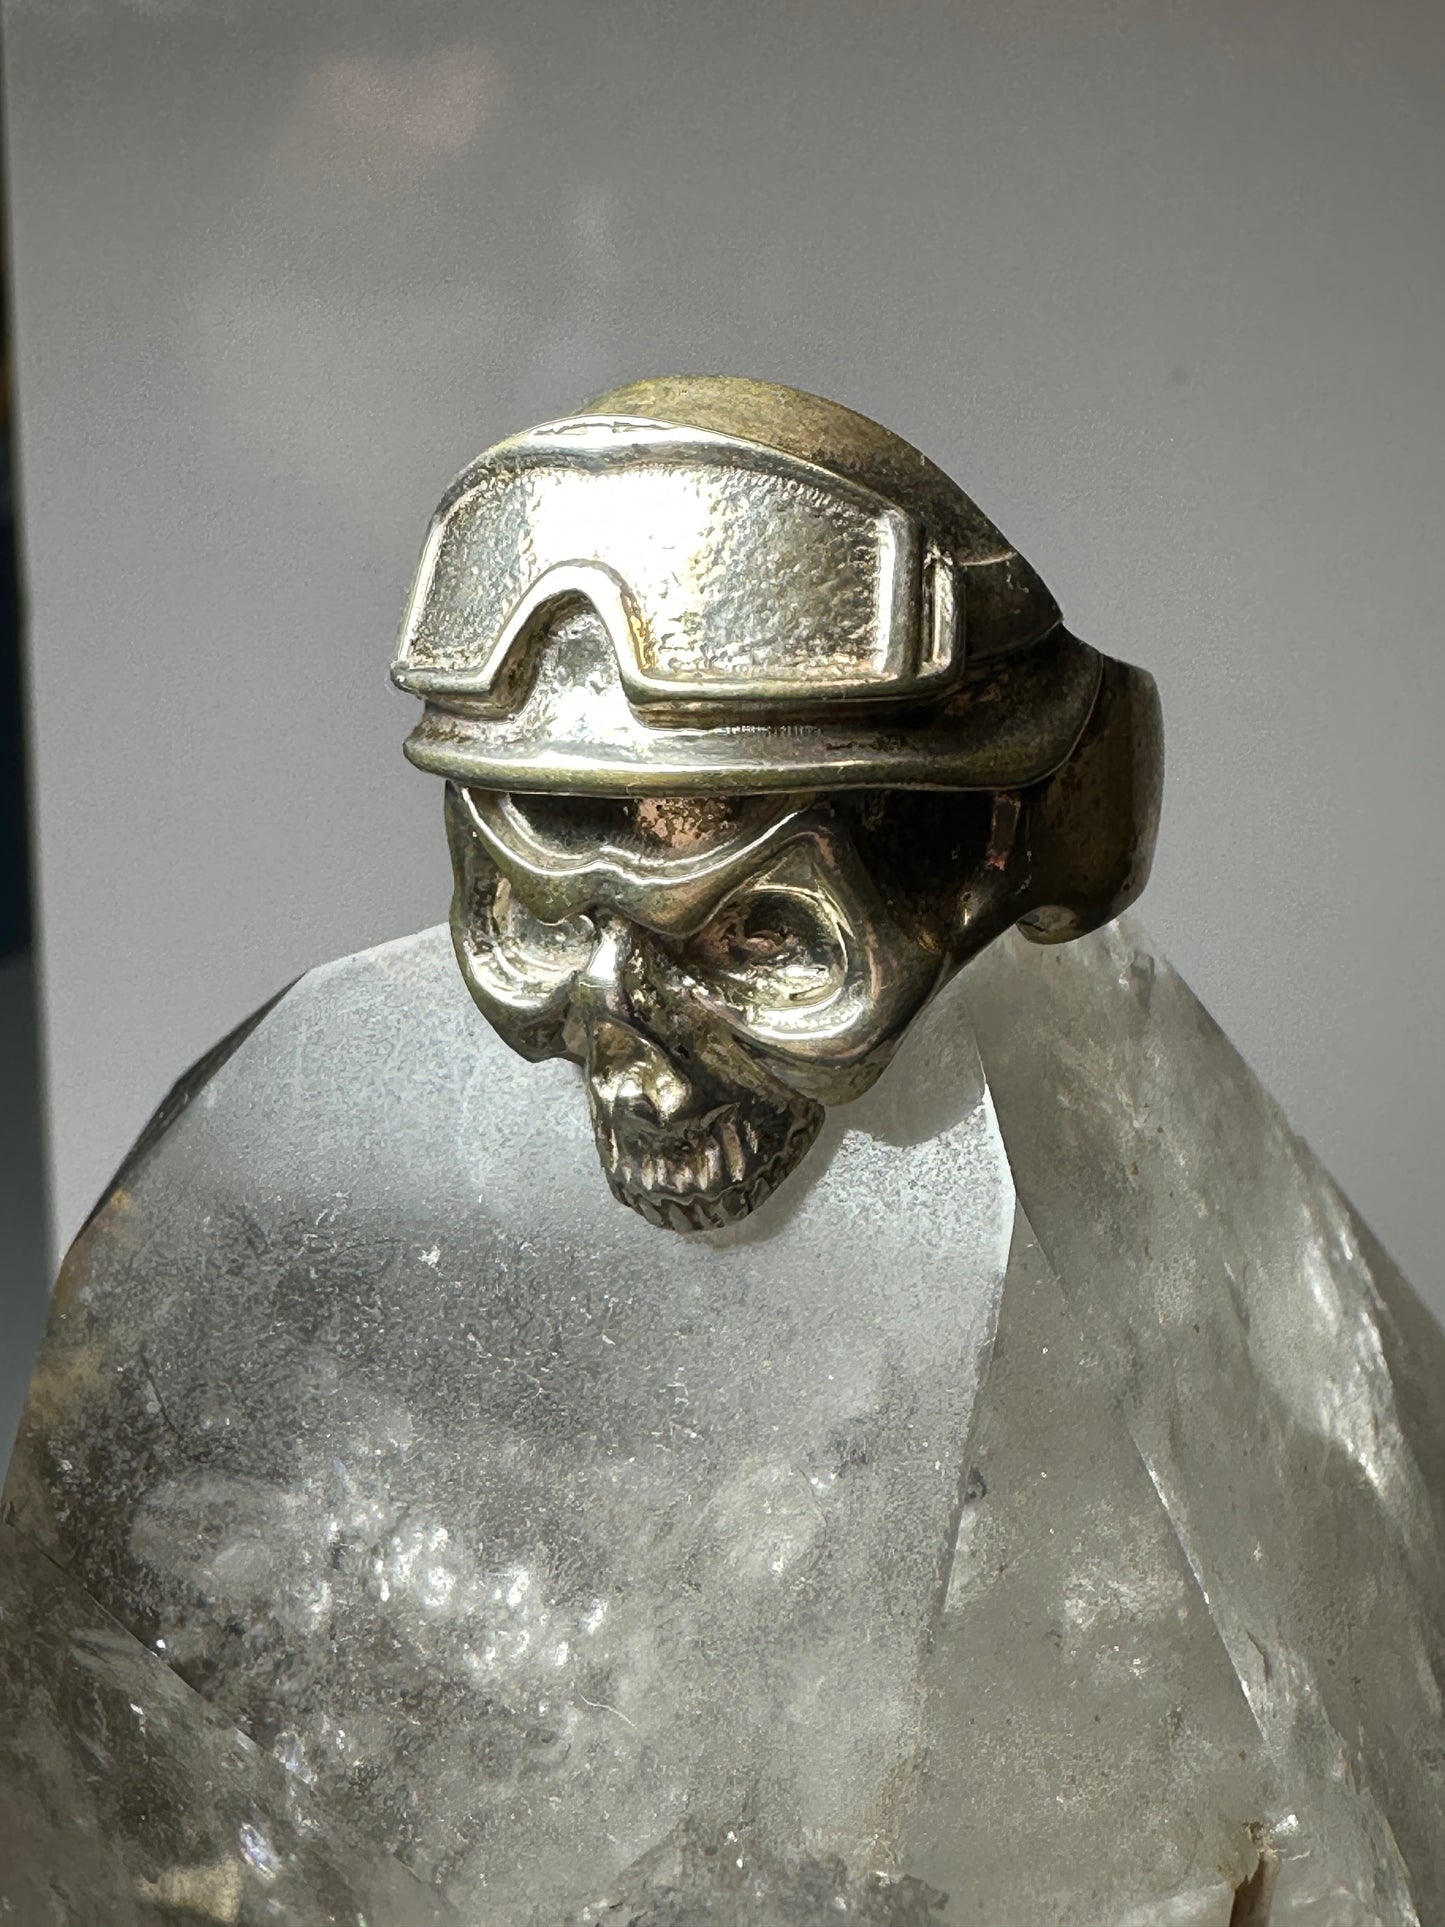 Skull ring size 10.25 biker band cast ring sterling silver from Ukraine